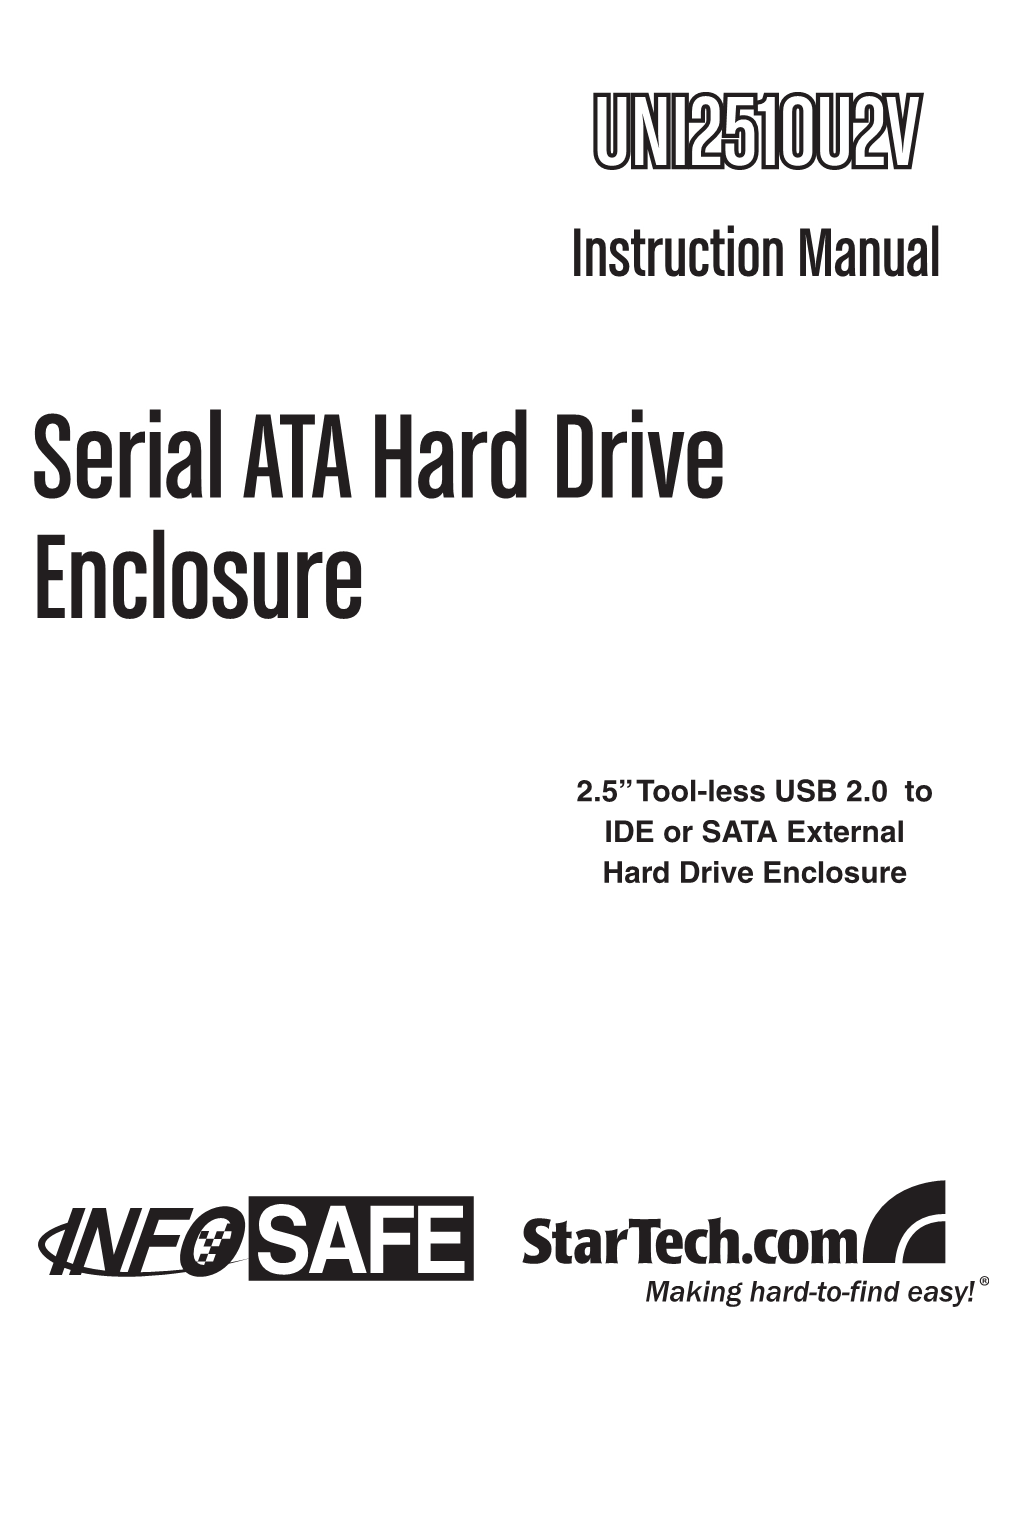 Serial ATA Hard Drive Enclosure